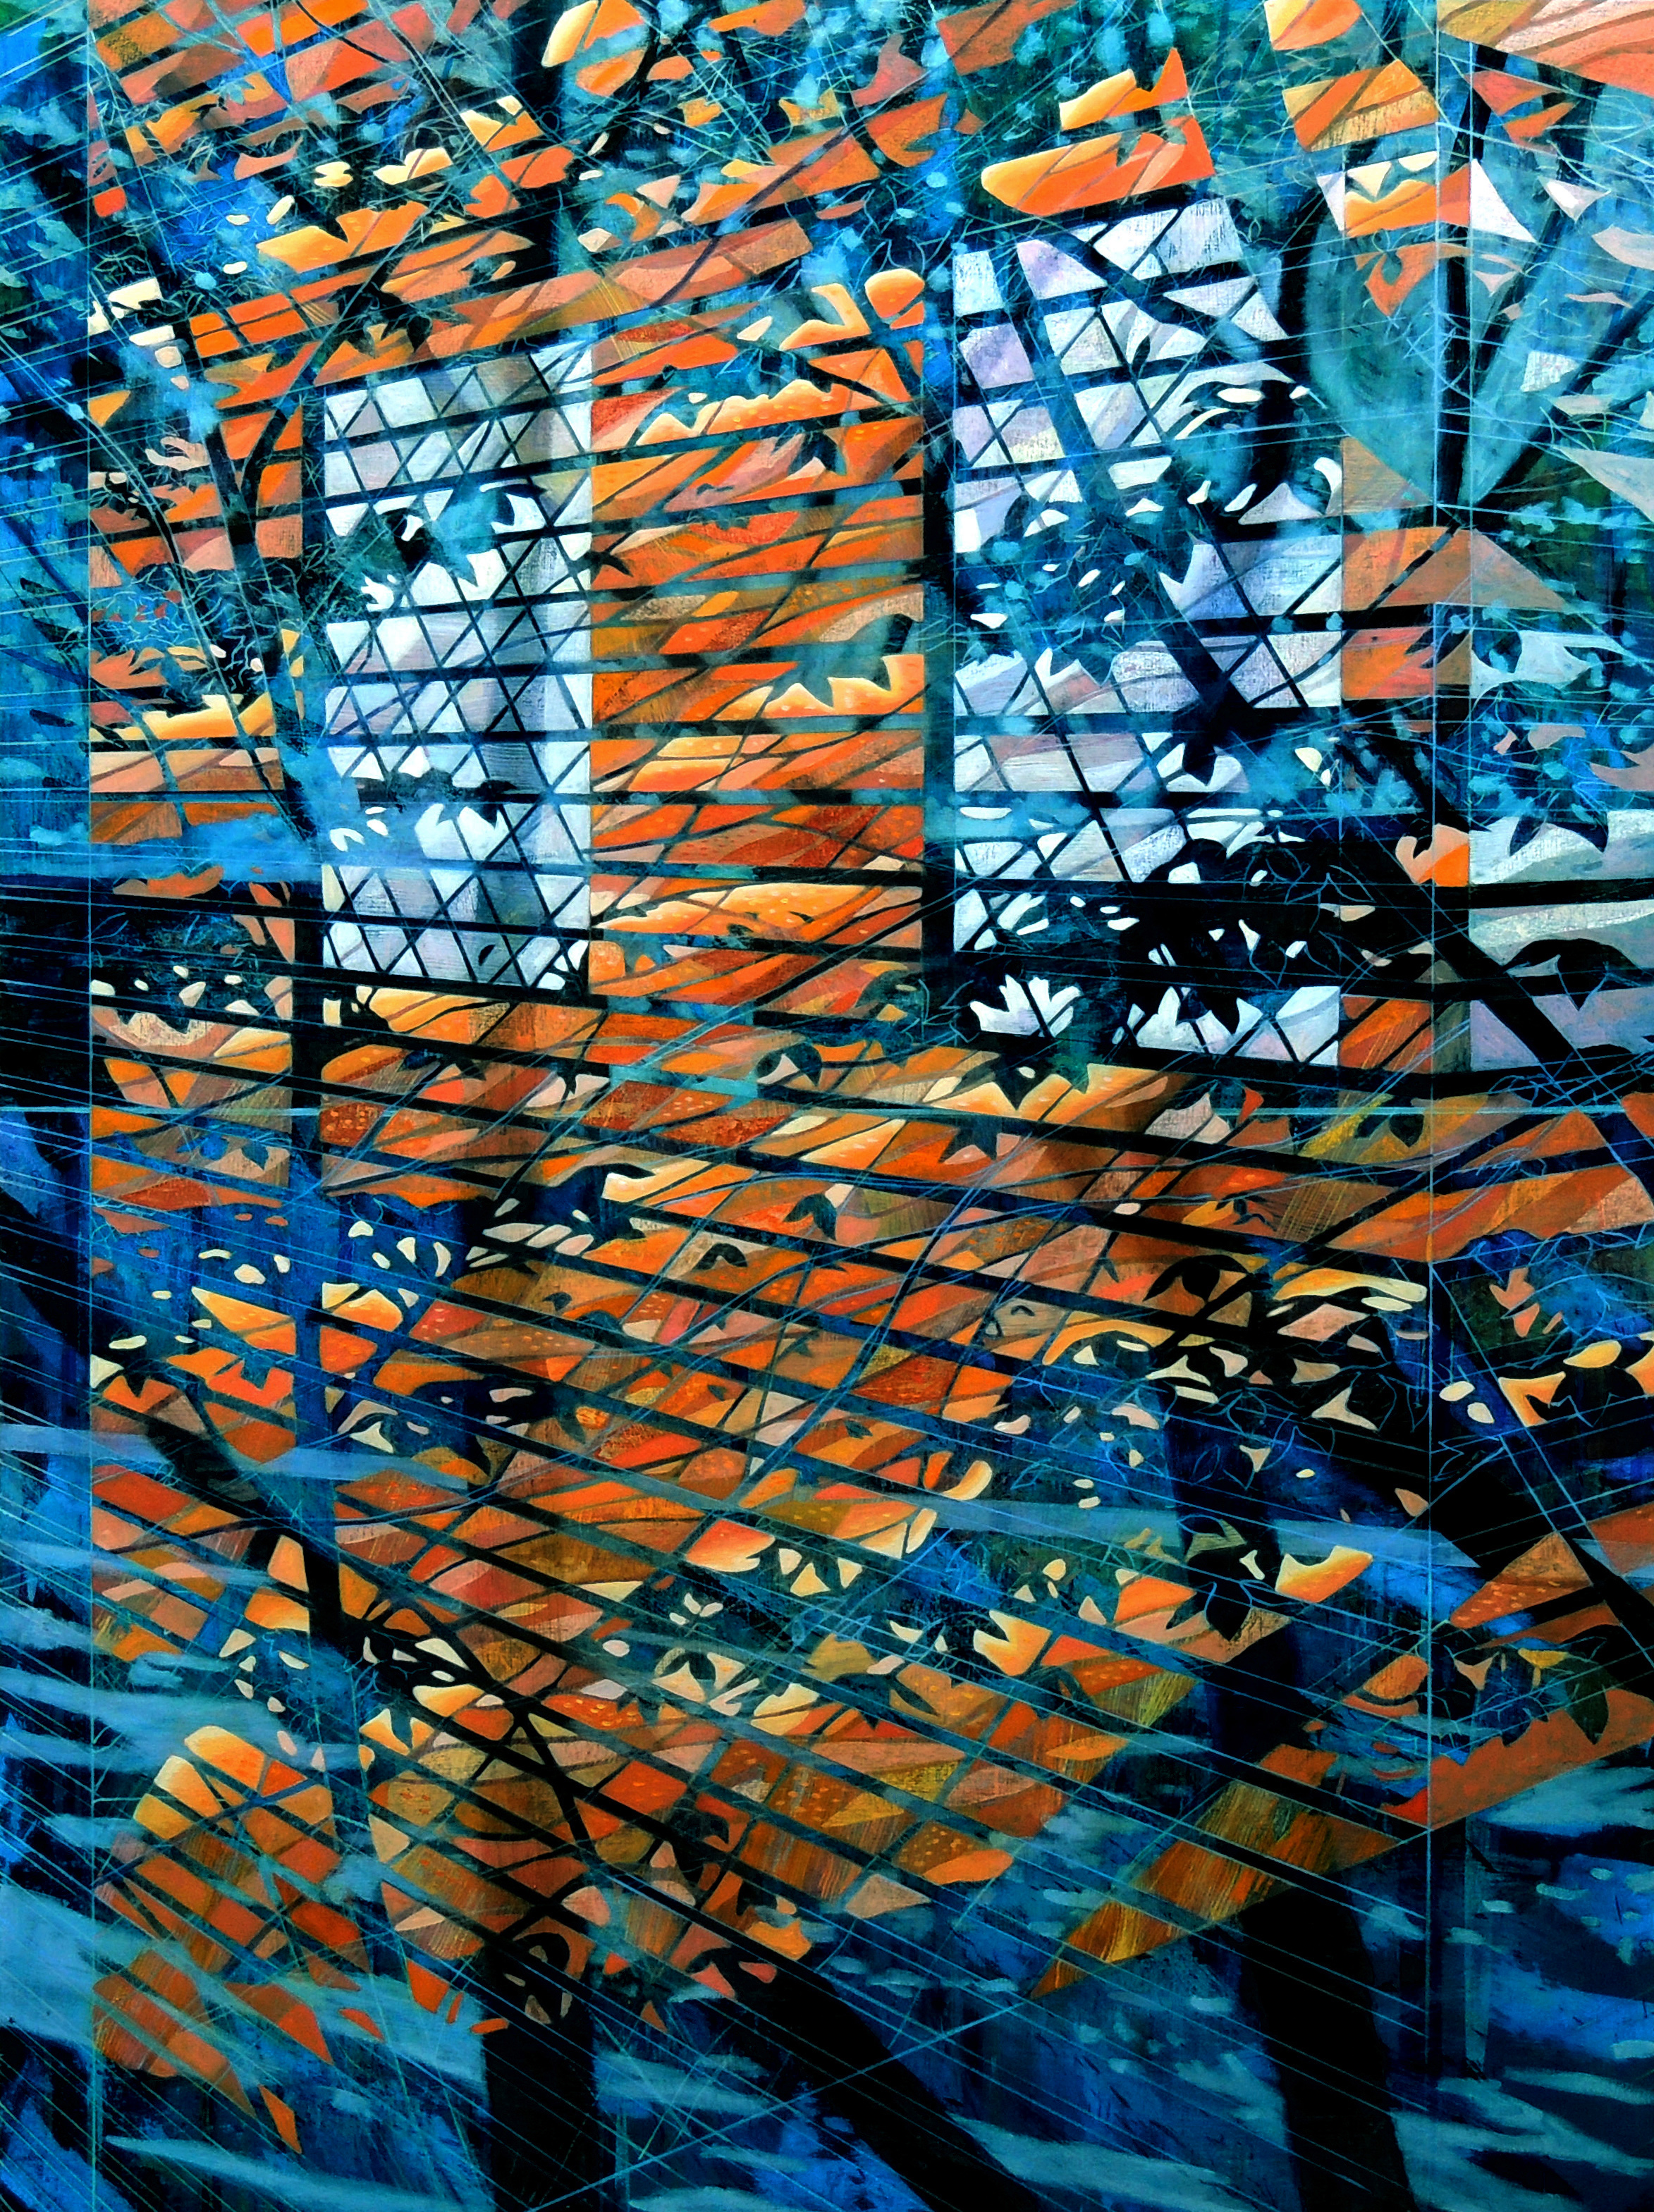   San Mateo Wall   48 x 36  Oil on Canvas  2014 